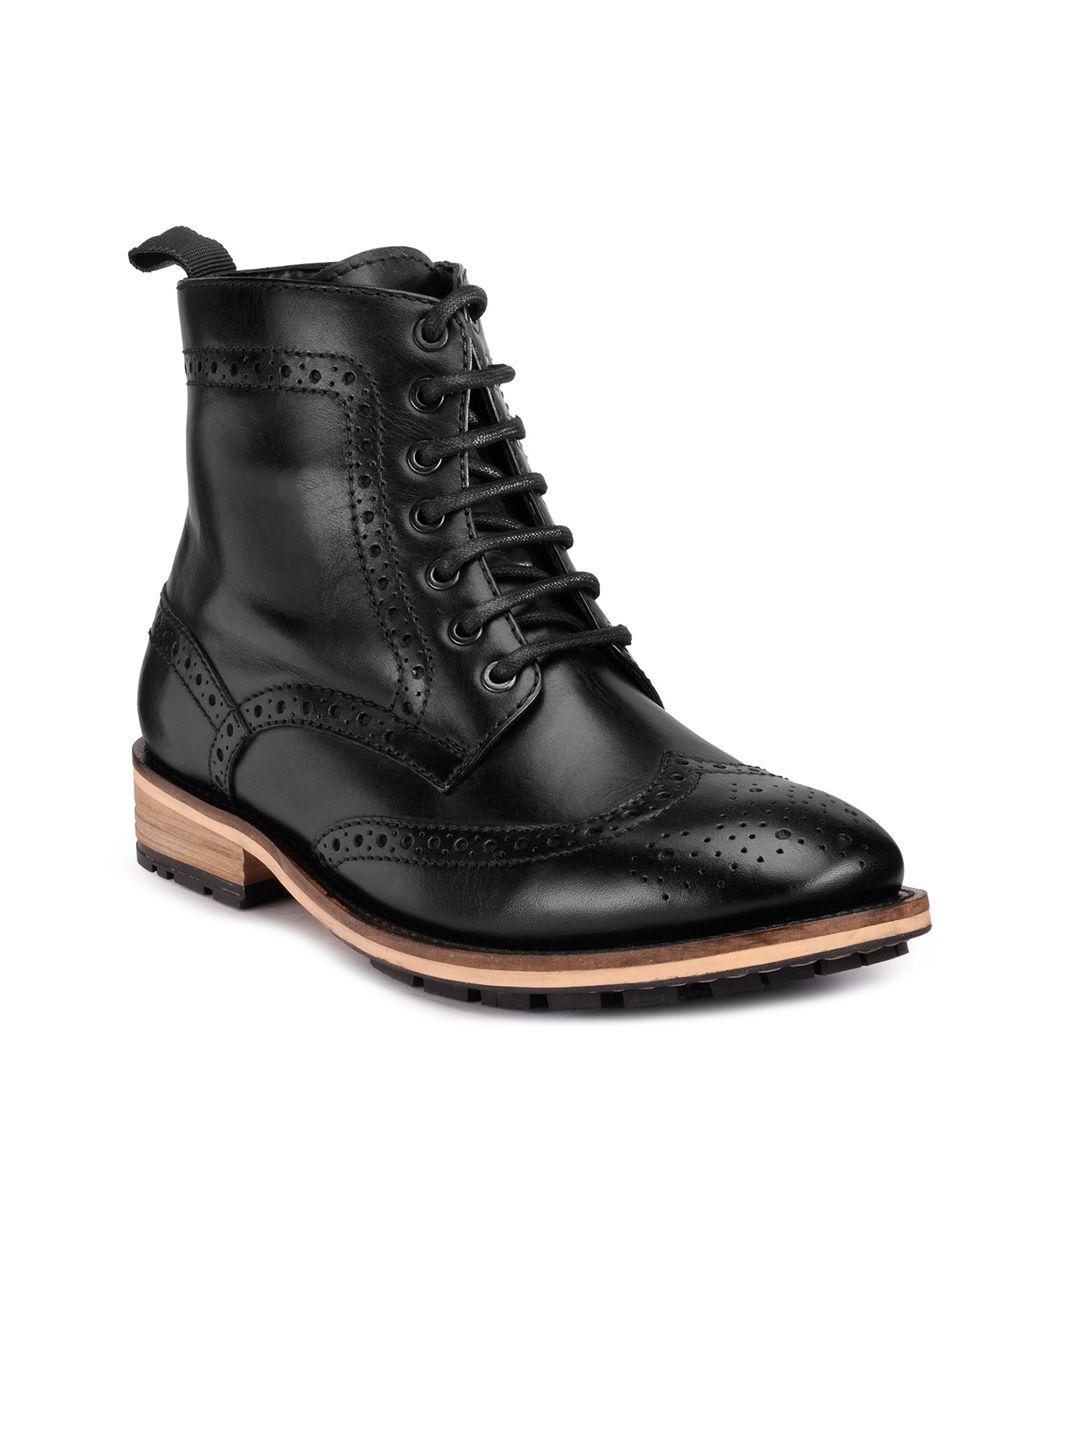 teakwood leathers men black solid casual boots